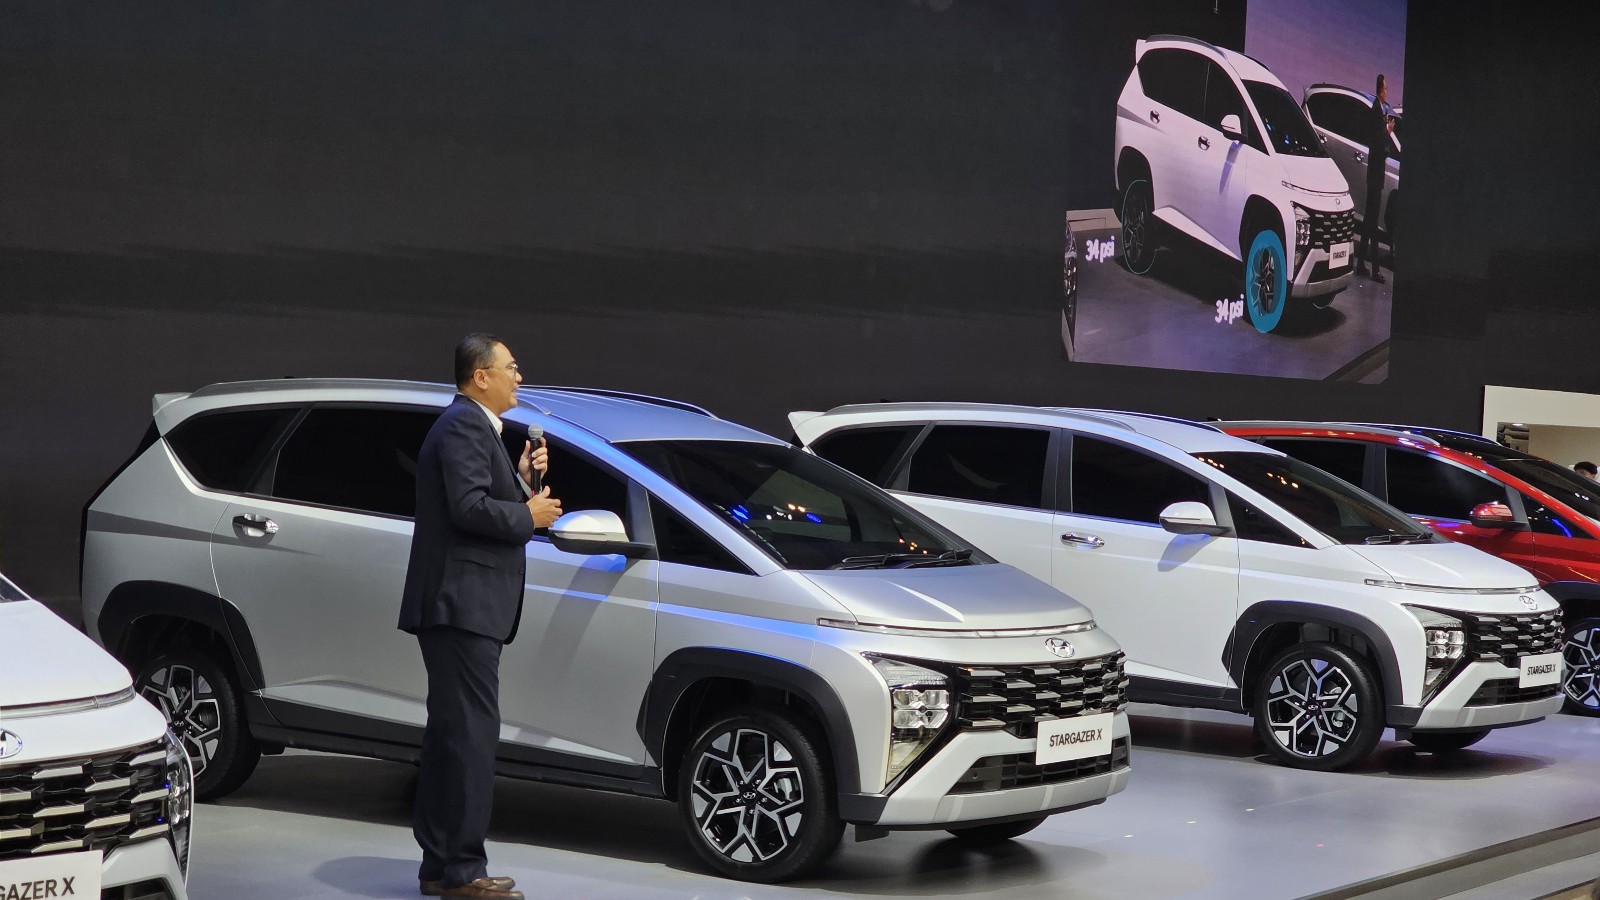 Usai GIIAS 2023, Permintaan Hyundai Stargazer X Masih Tinggi?